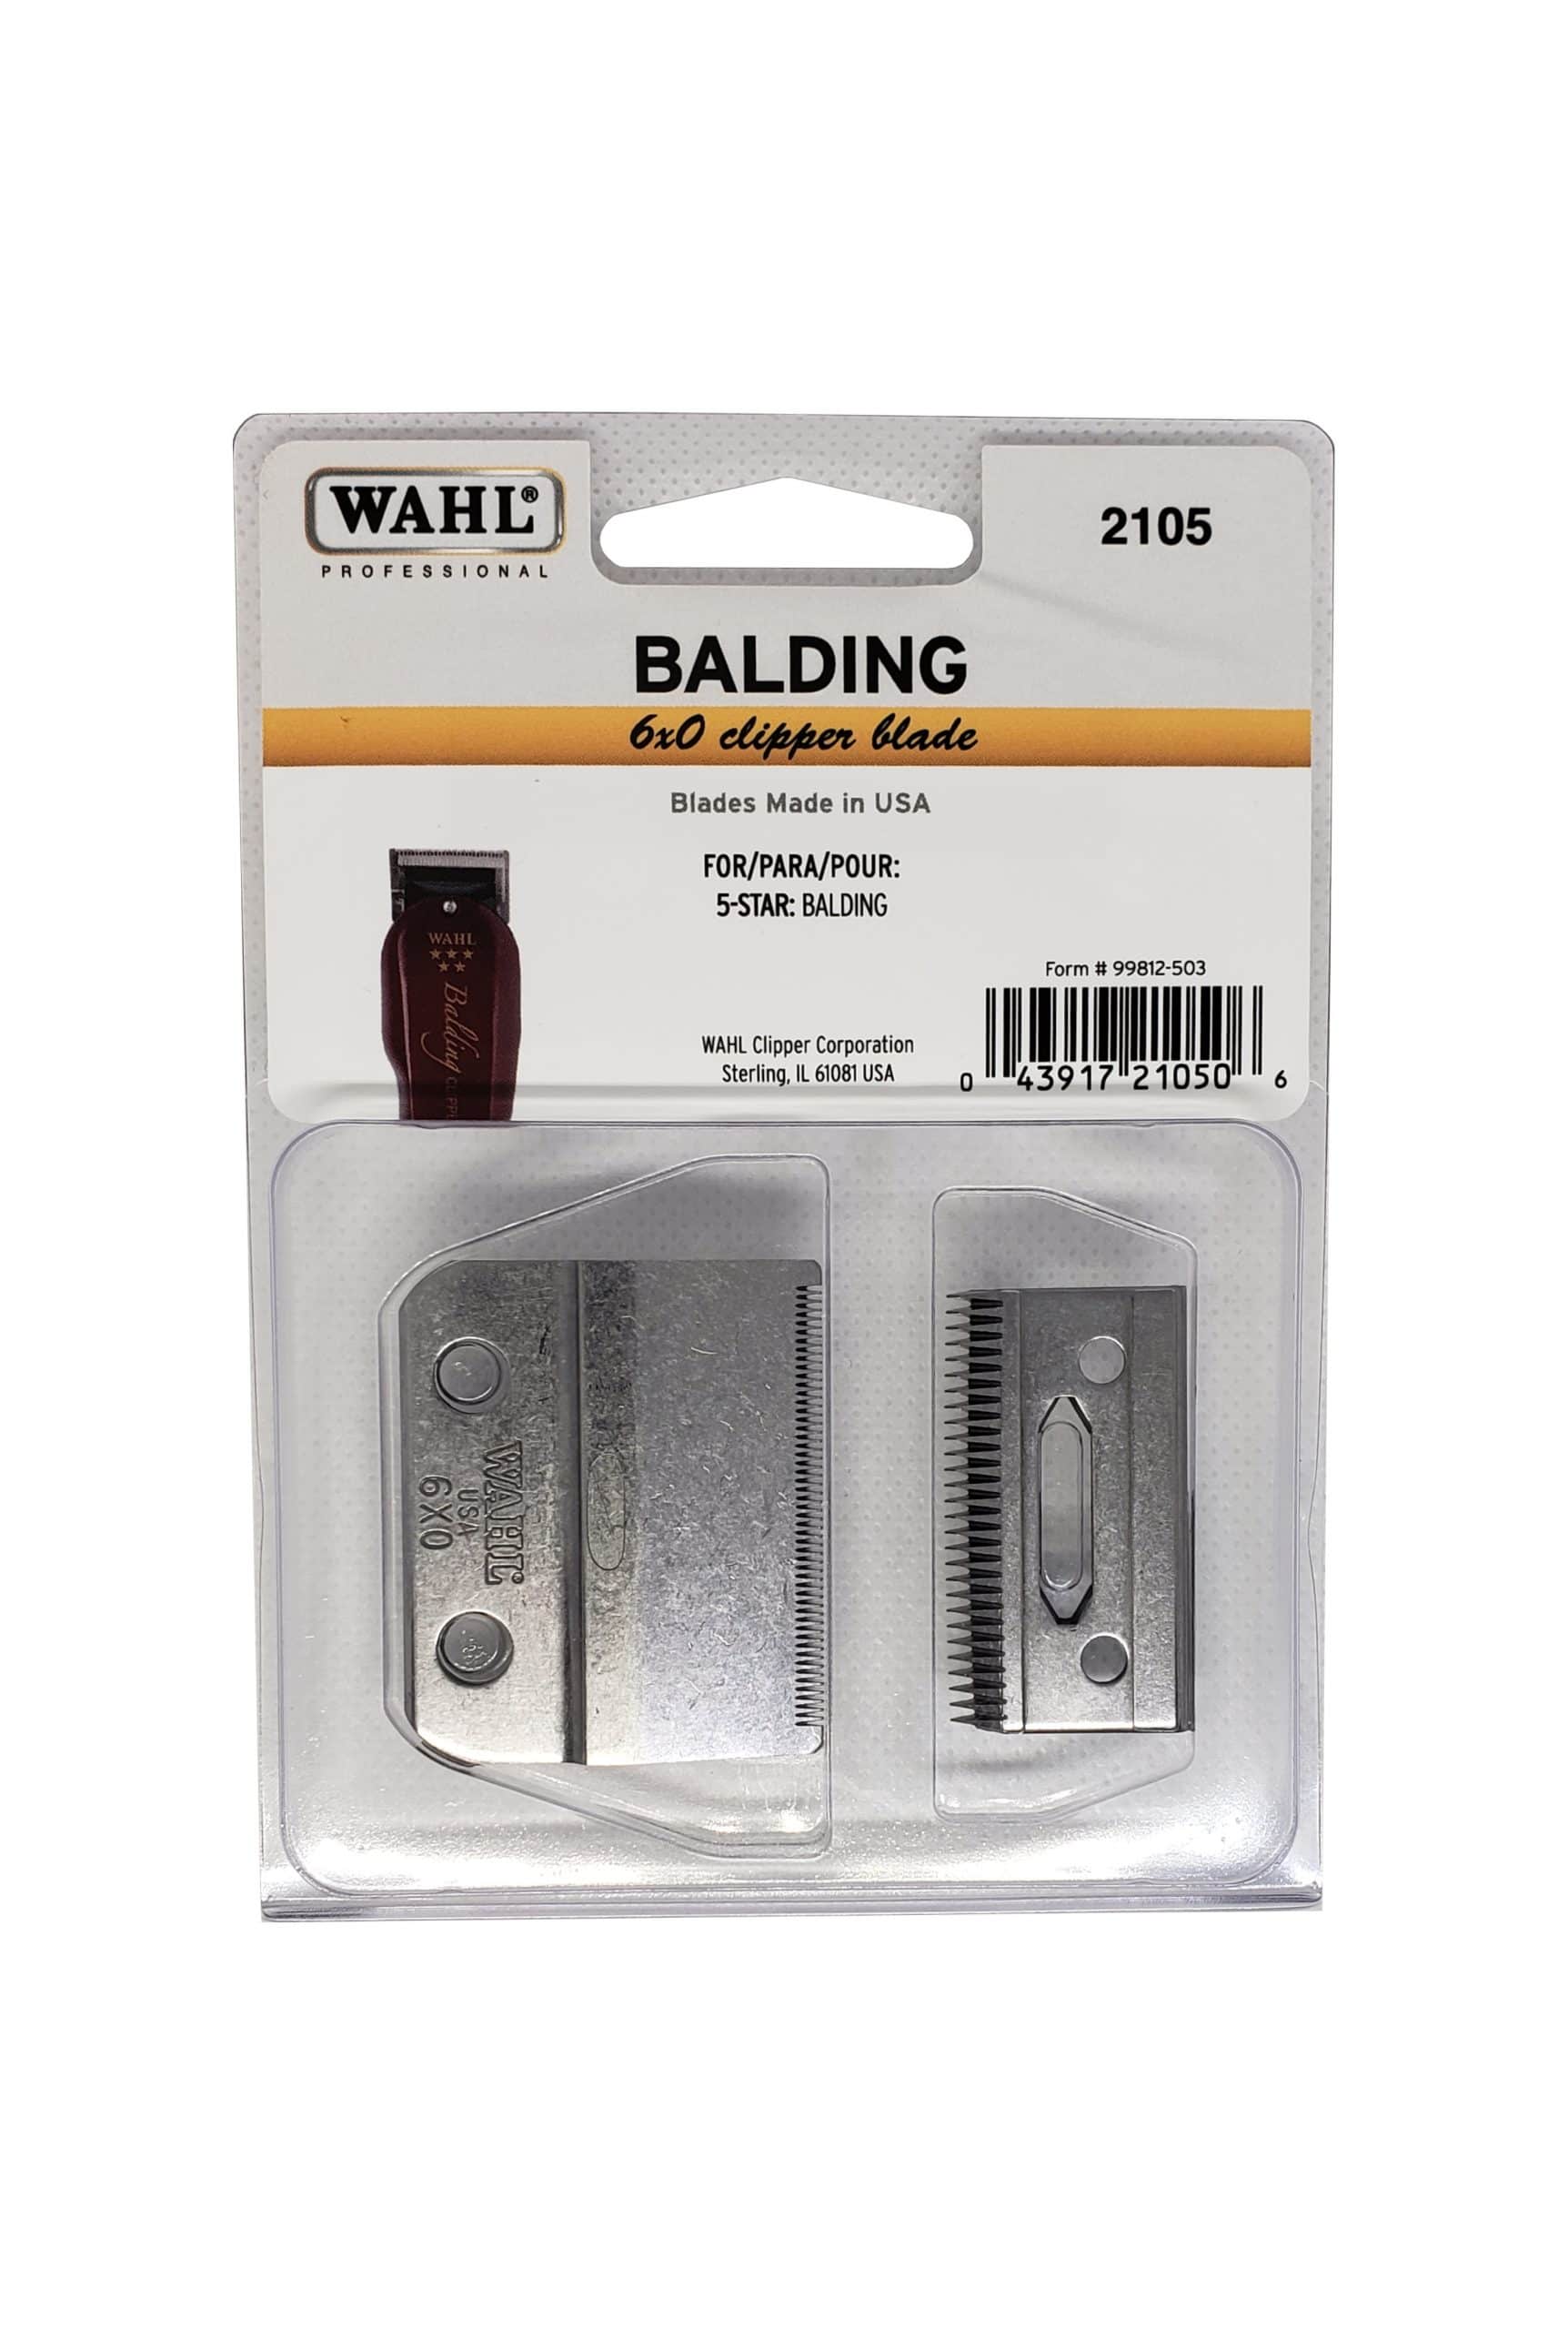 wahl balding clipper blades 6x0